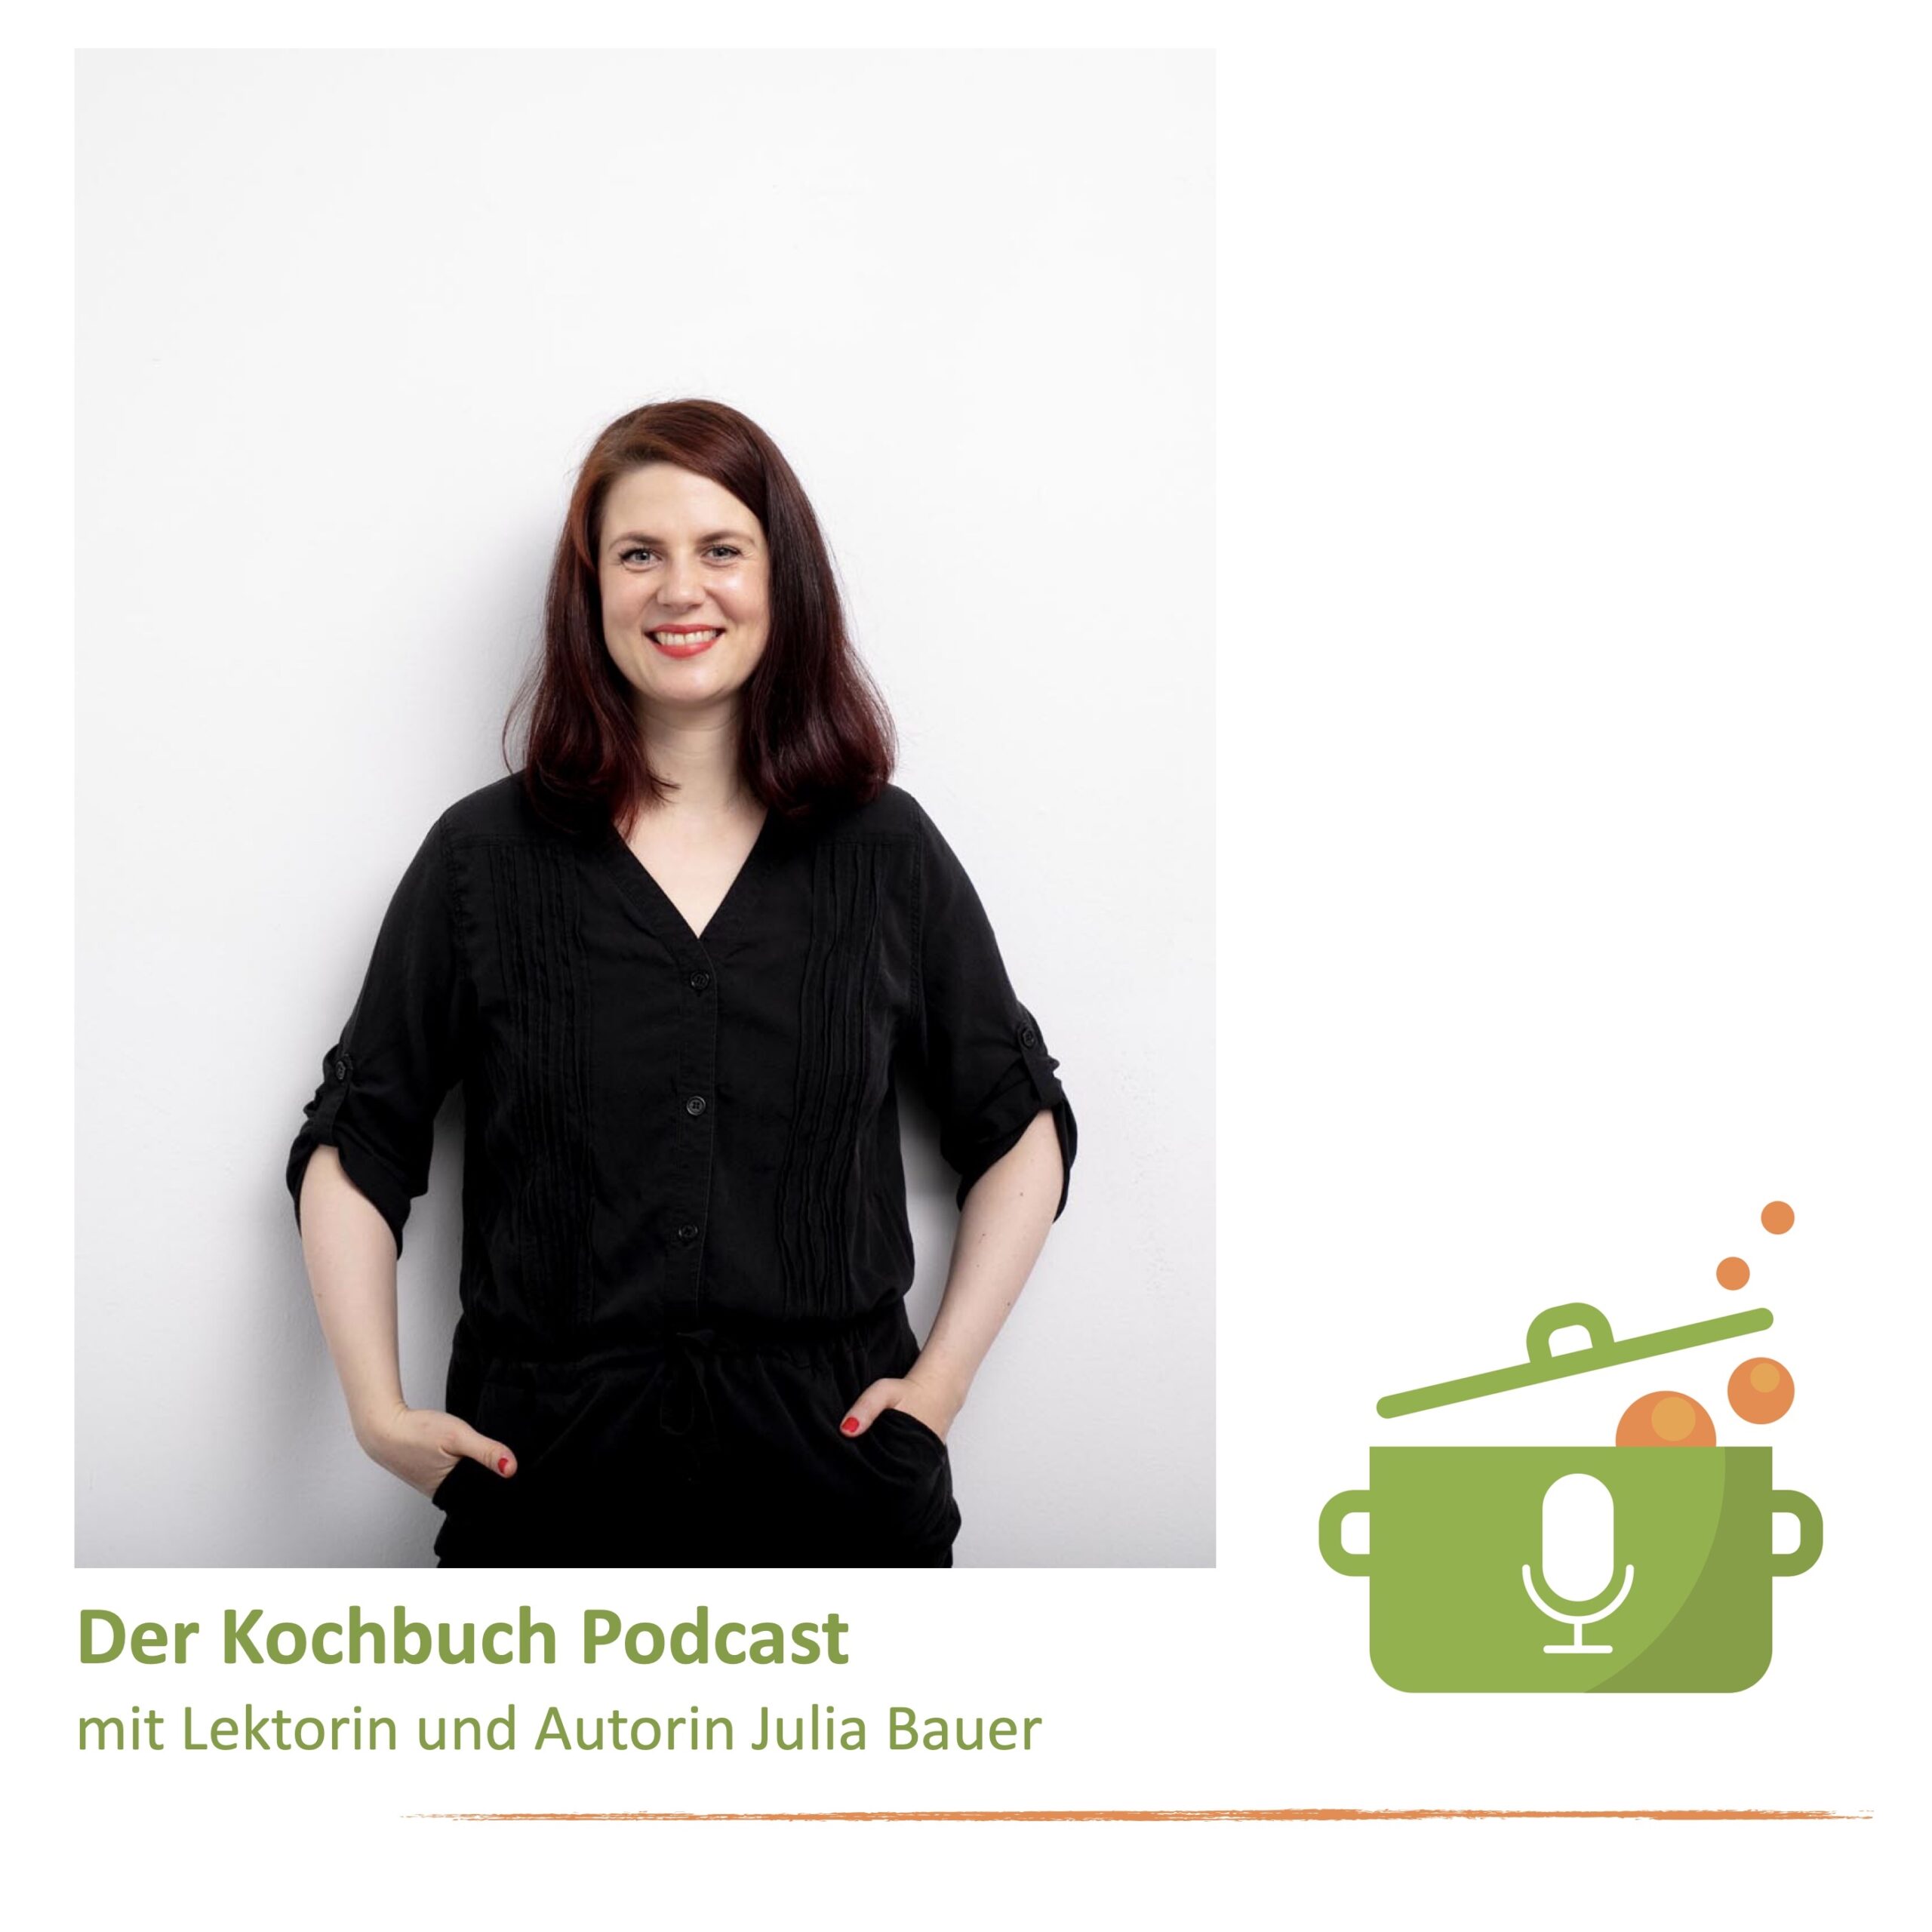 Julia Bauer zu Gast im Kochbuch Podcast